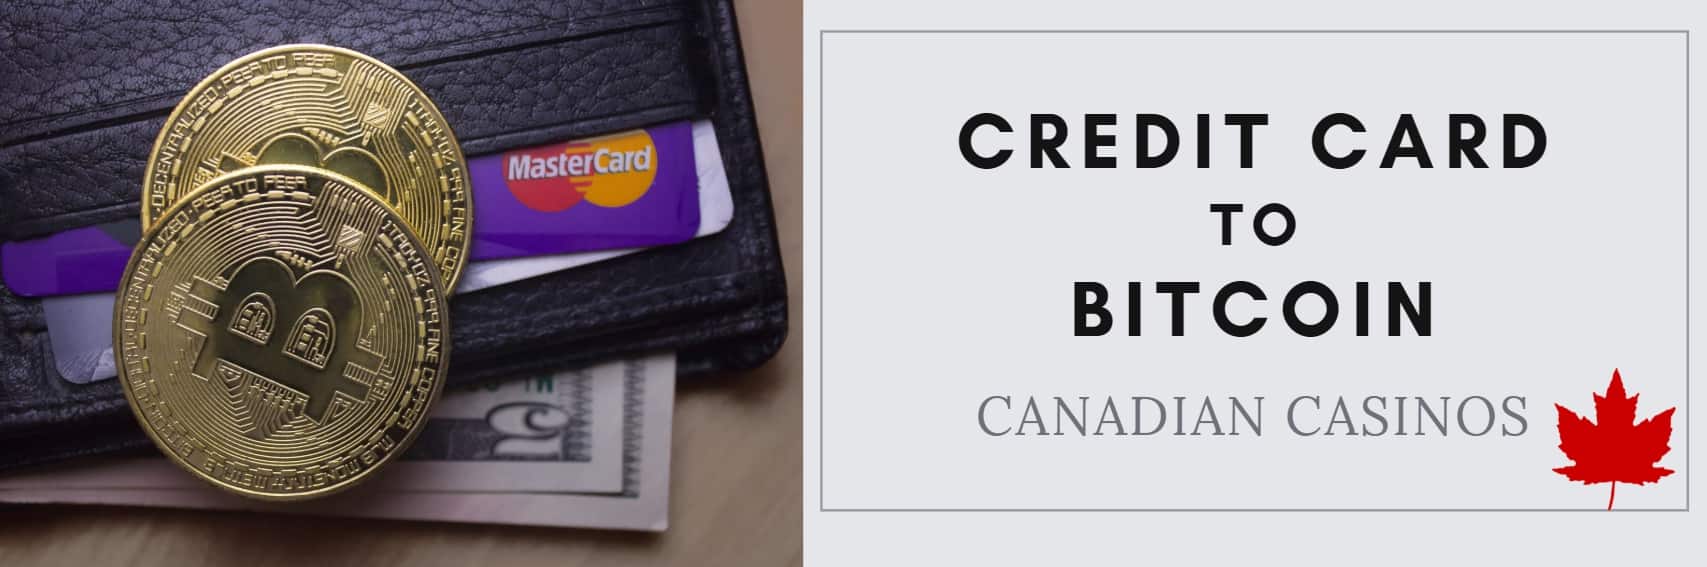 credit card to bitcoin casinos